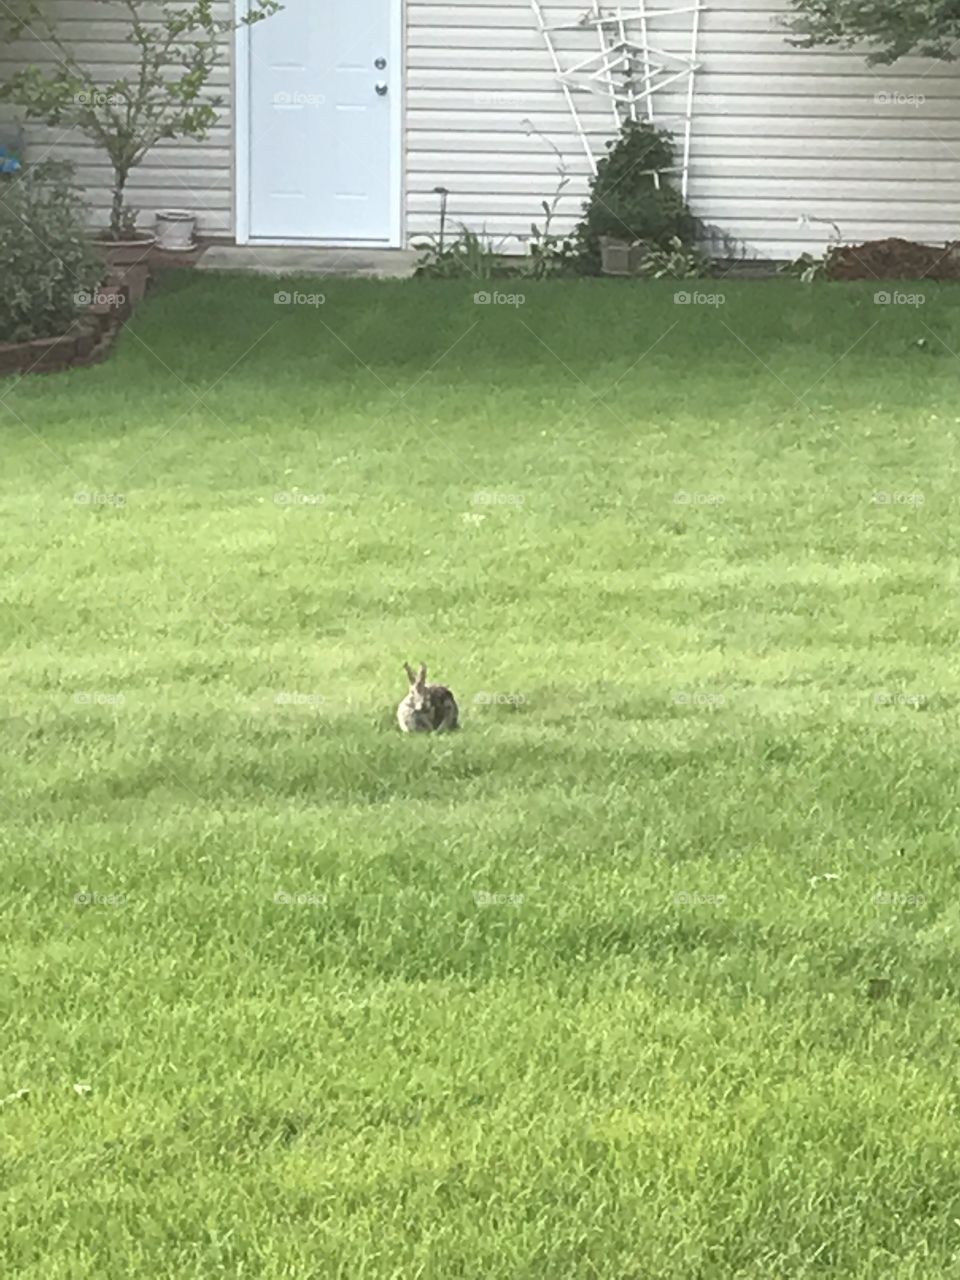 Candid of rabbit in grandma's backyard.